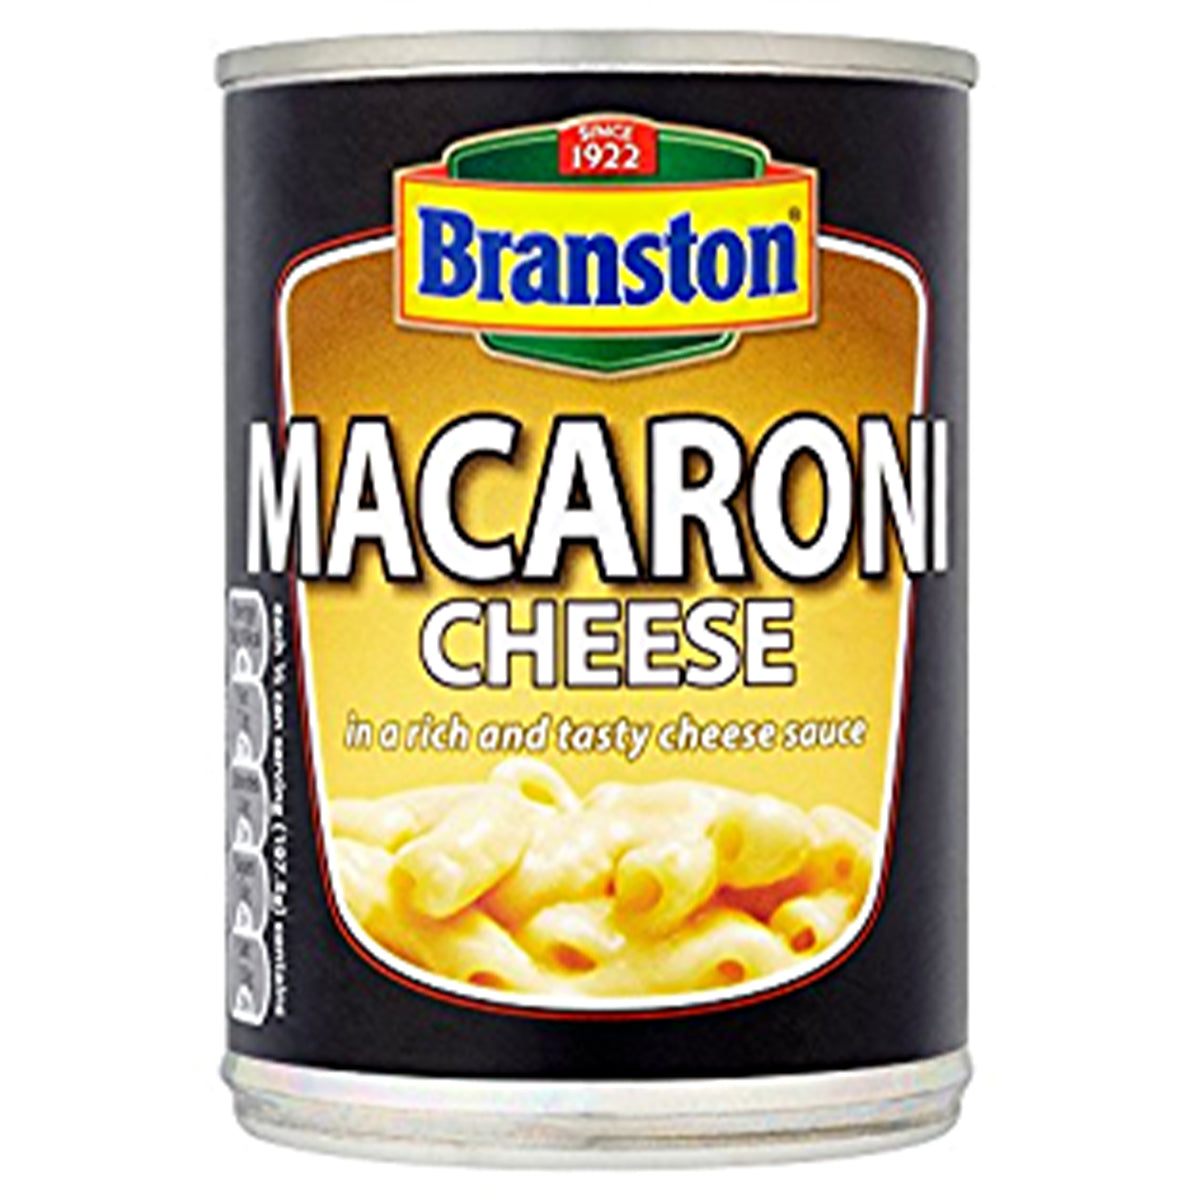 Branston - Macaroni Cheese - 395g - Continental Food Store